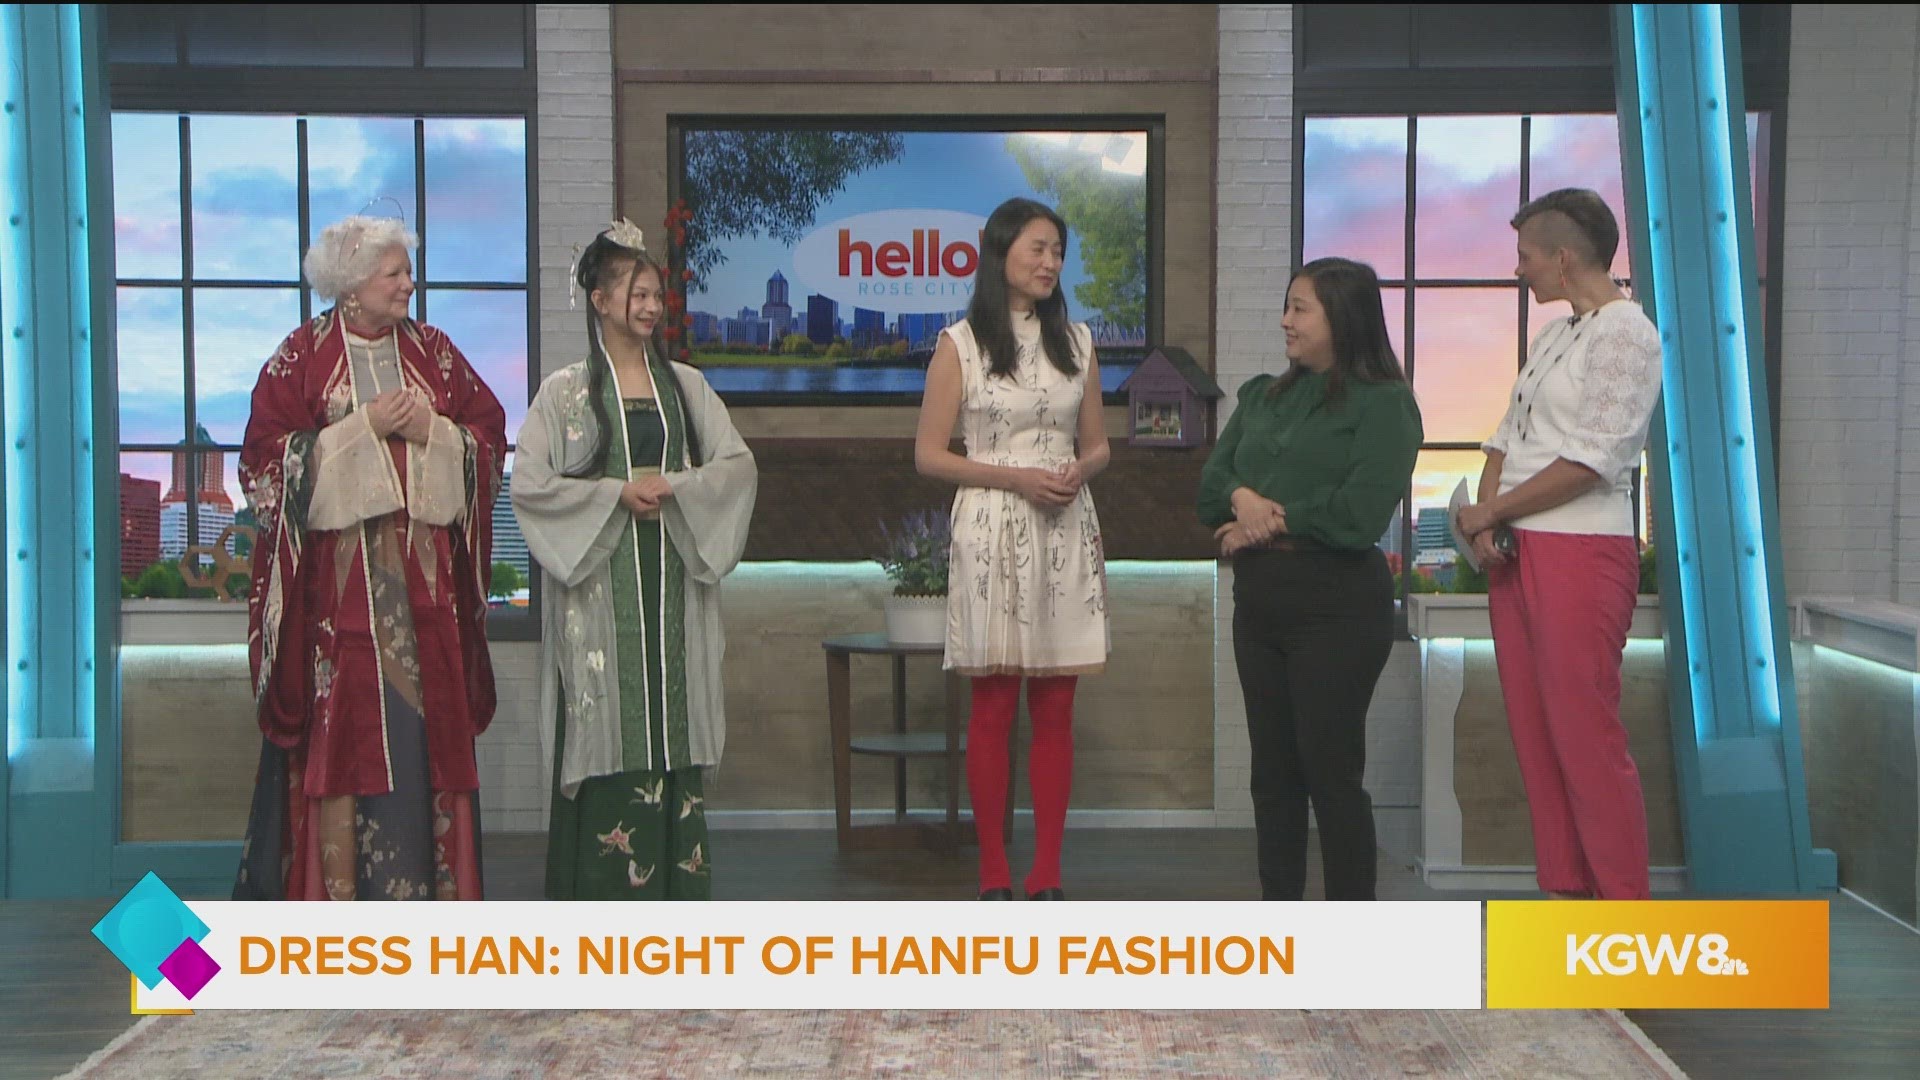 Dress Han: Night of Hanfu Fashion, is Friday, July 28